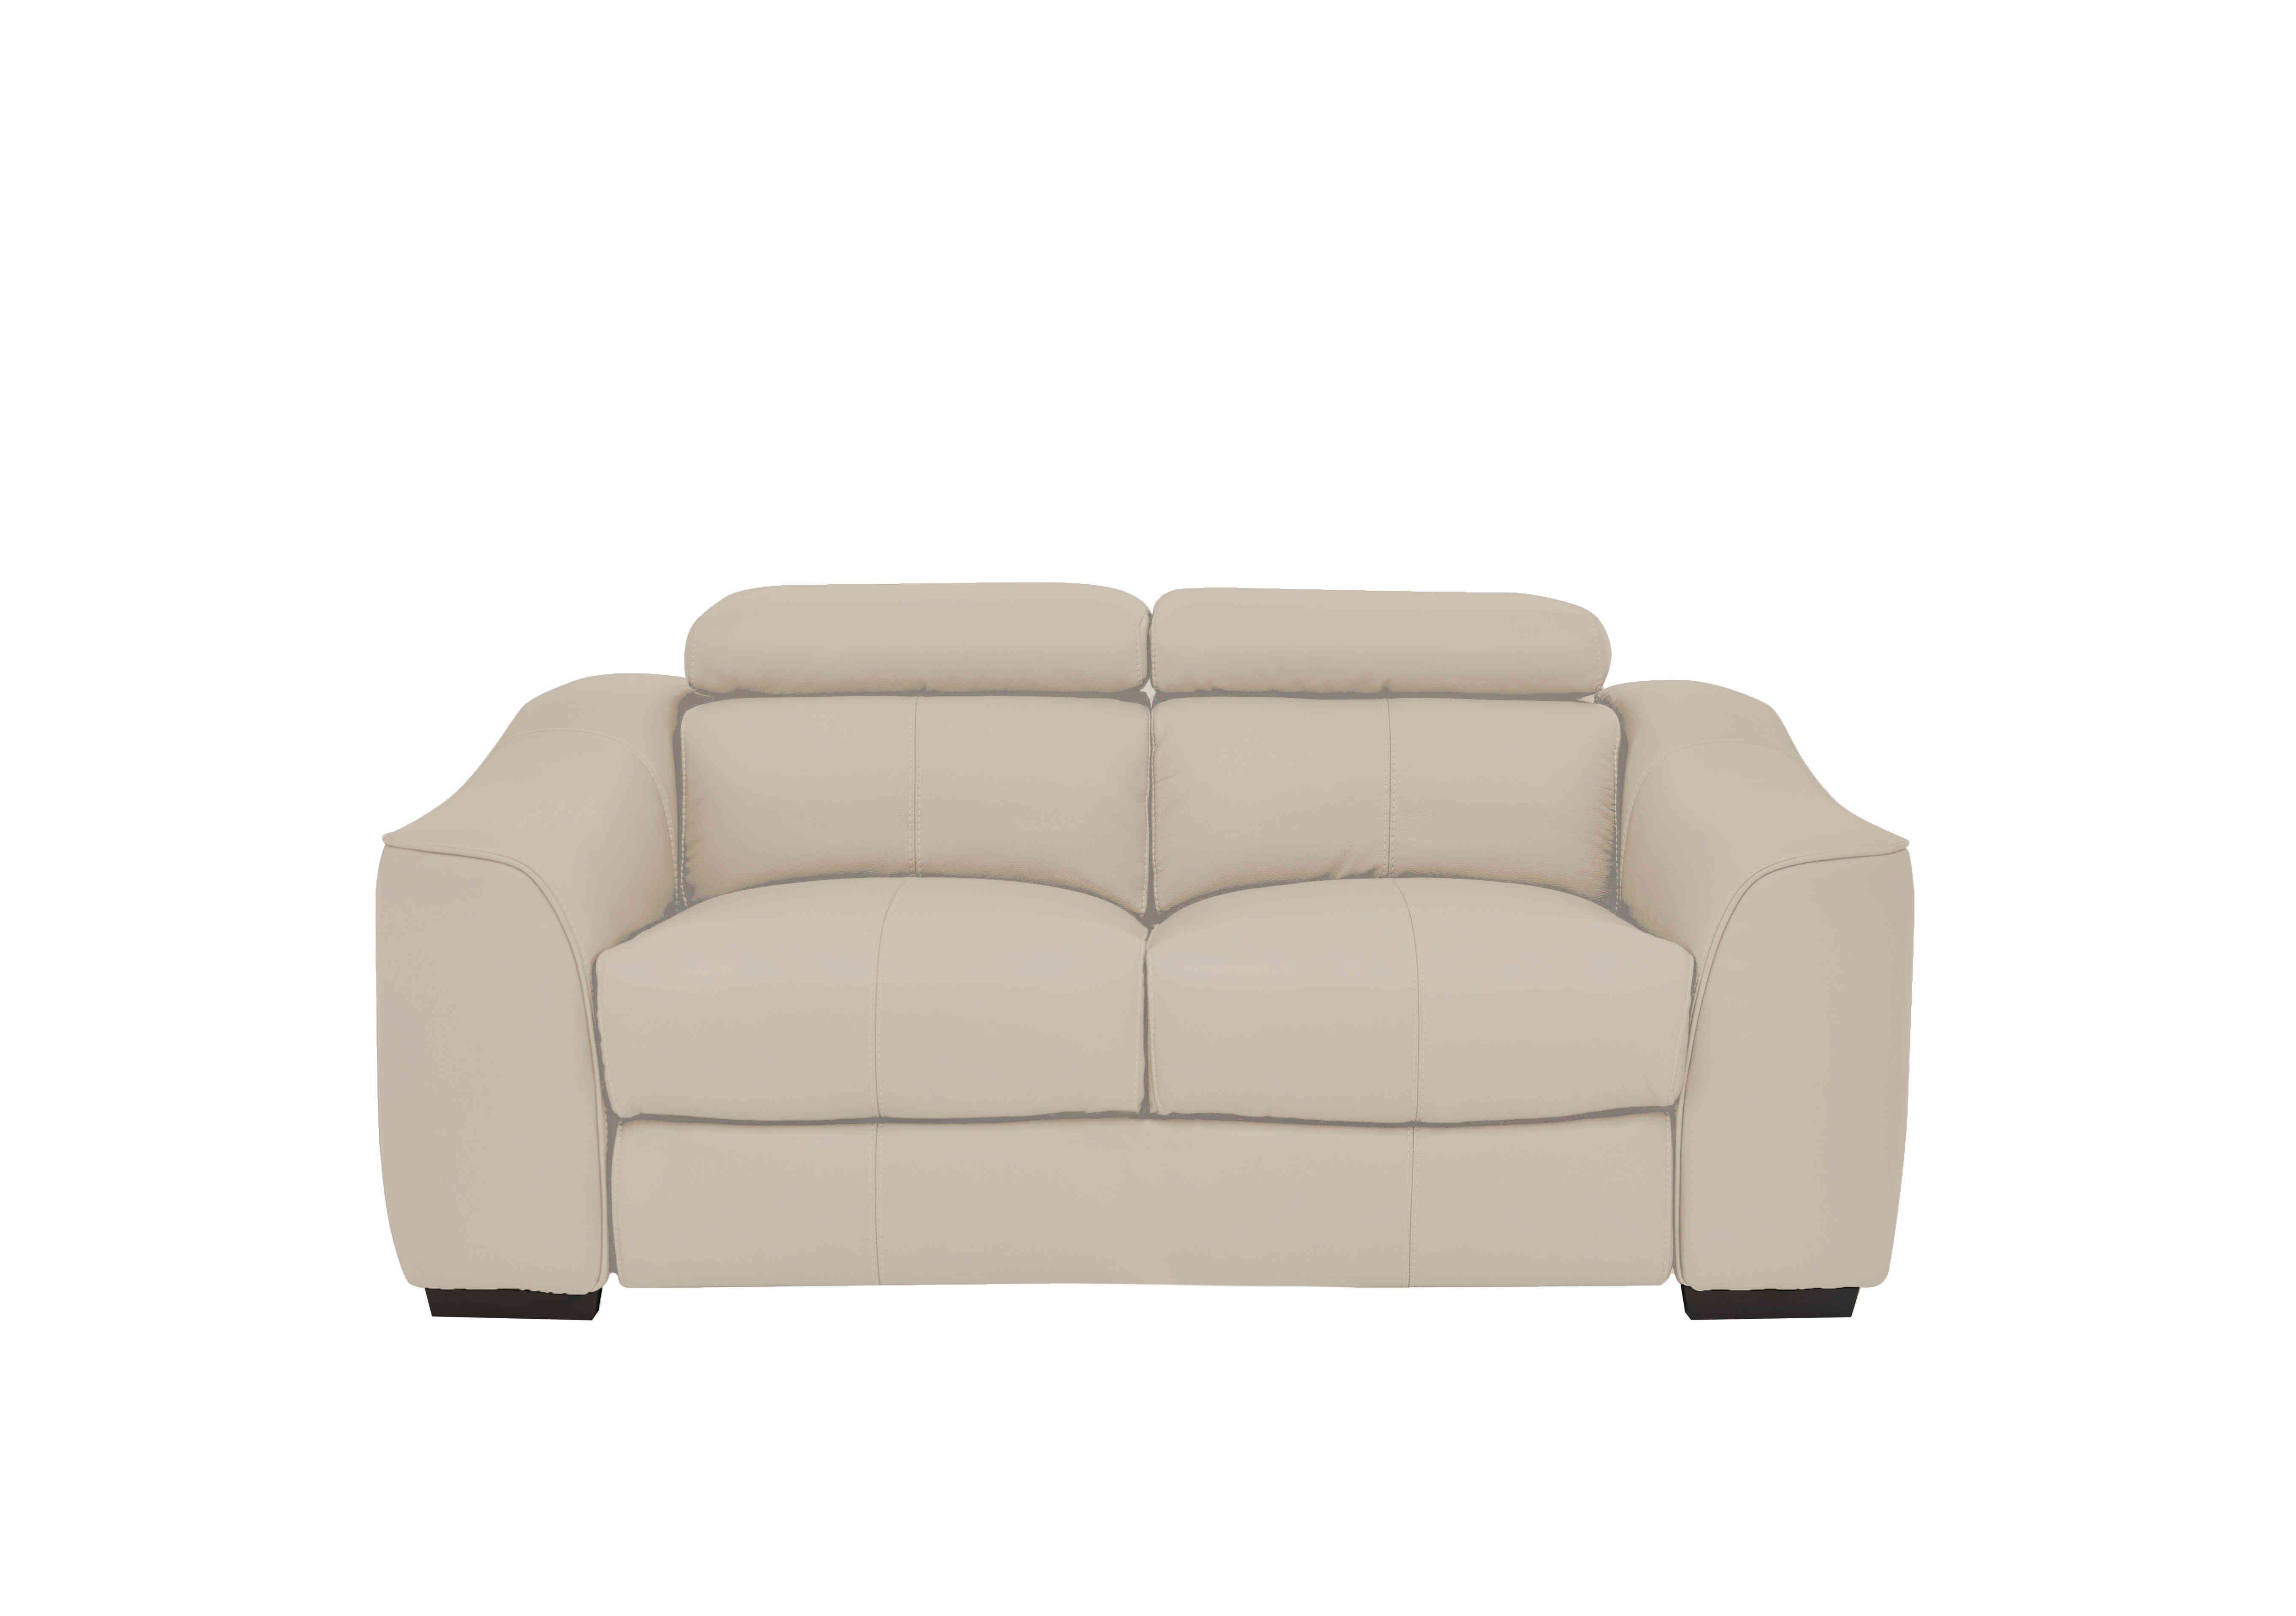 Elixir 2 Seater Leather Sofa in Bv-041e Dapple Grey on Furniture Village